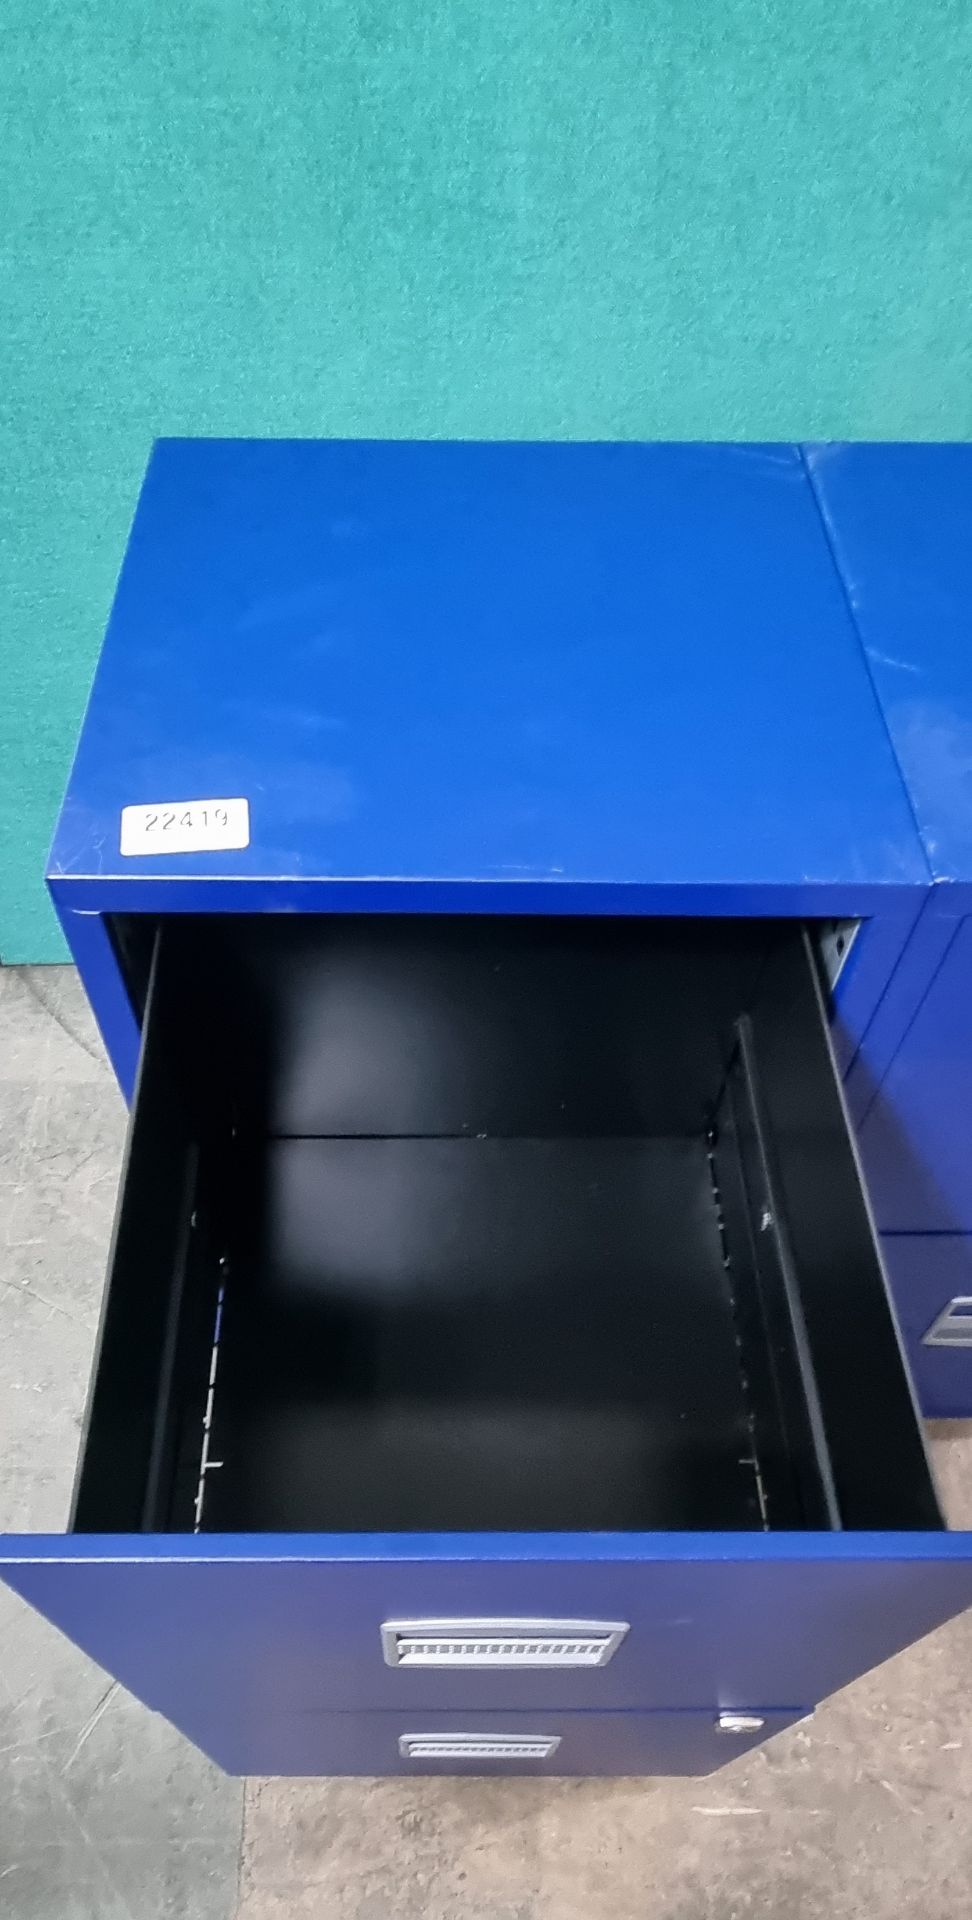 2 x Blue 2 Drawer Filing Cabinets No Keys - Image 2 of 5